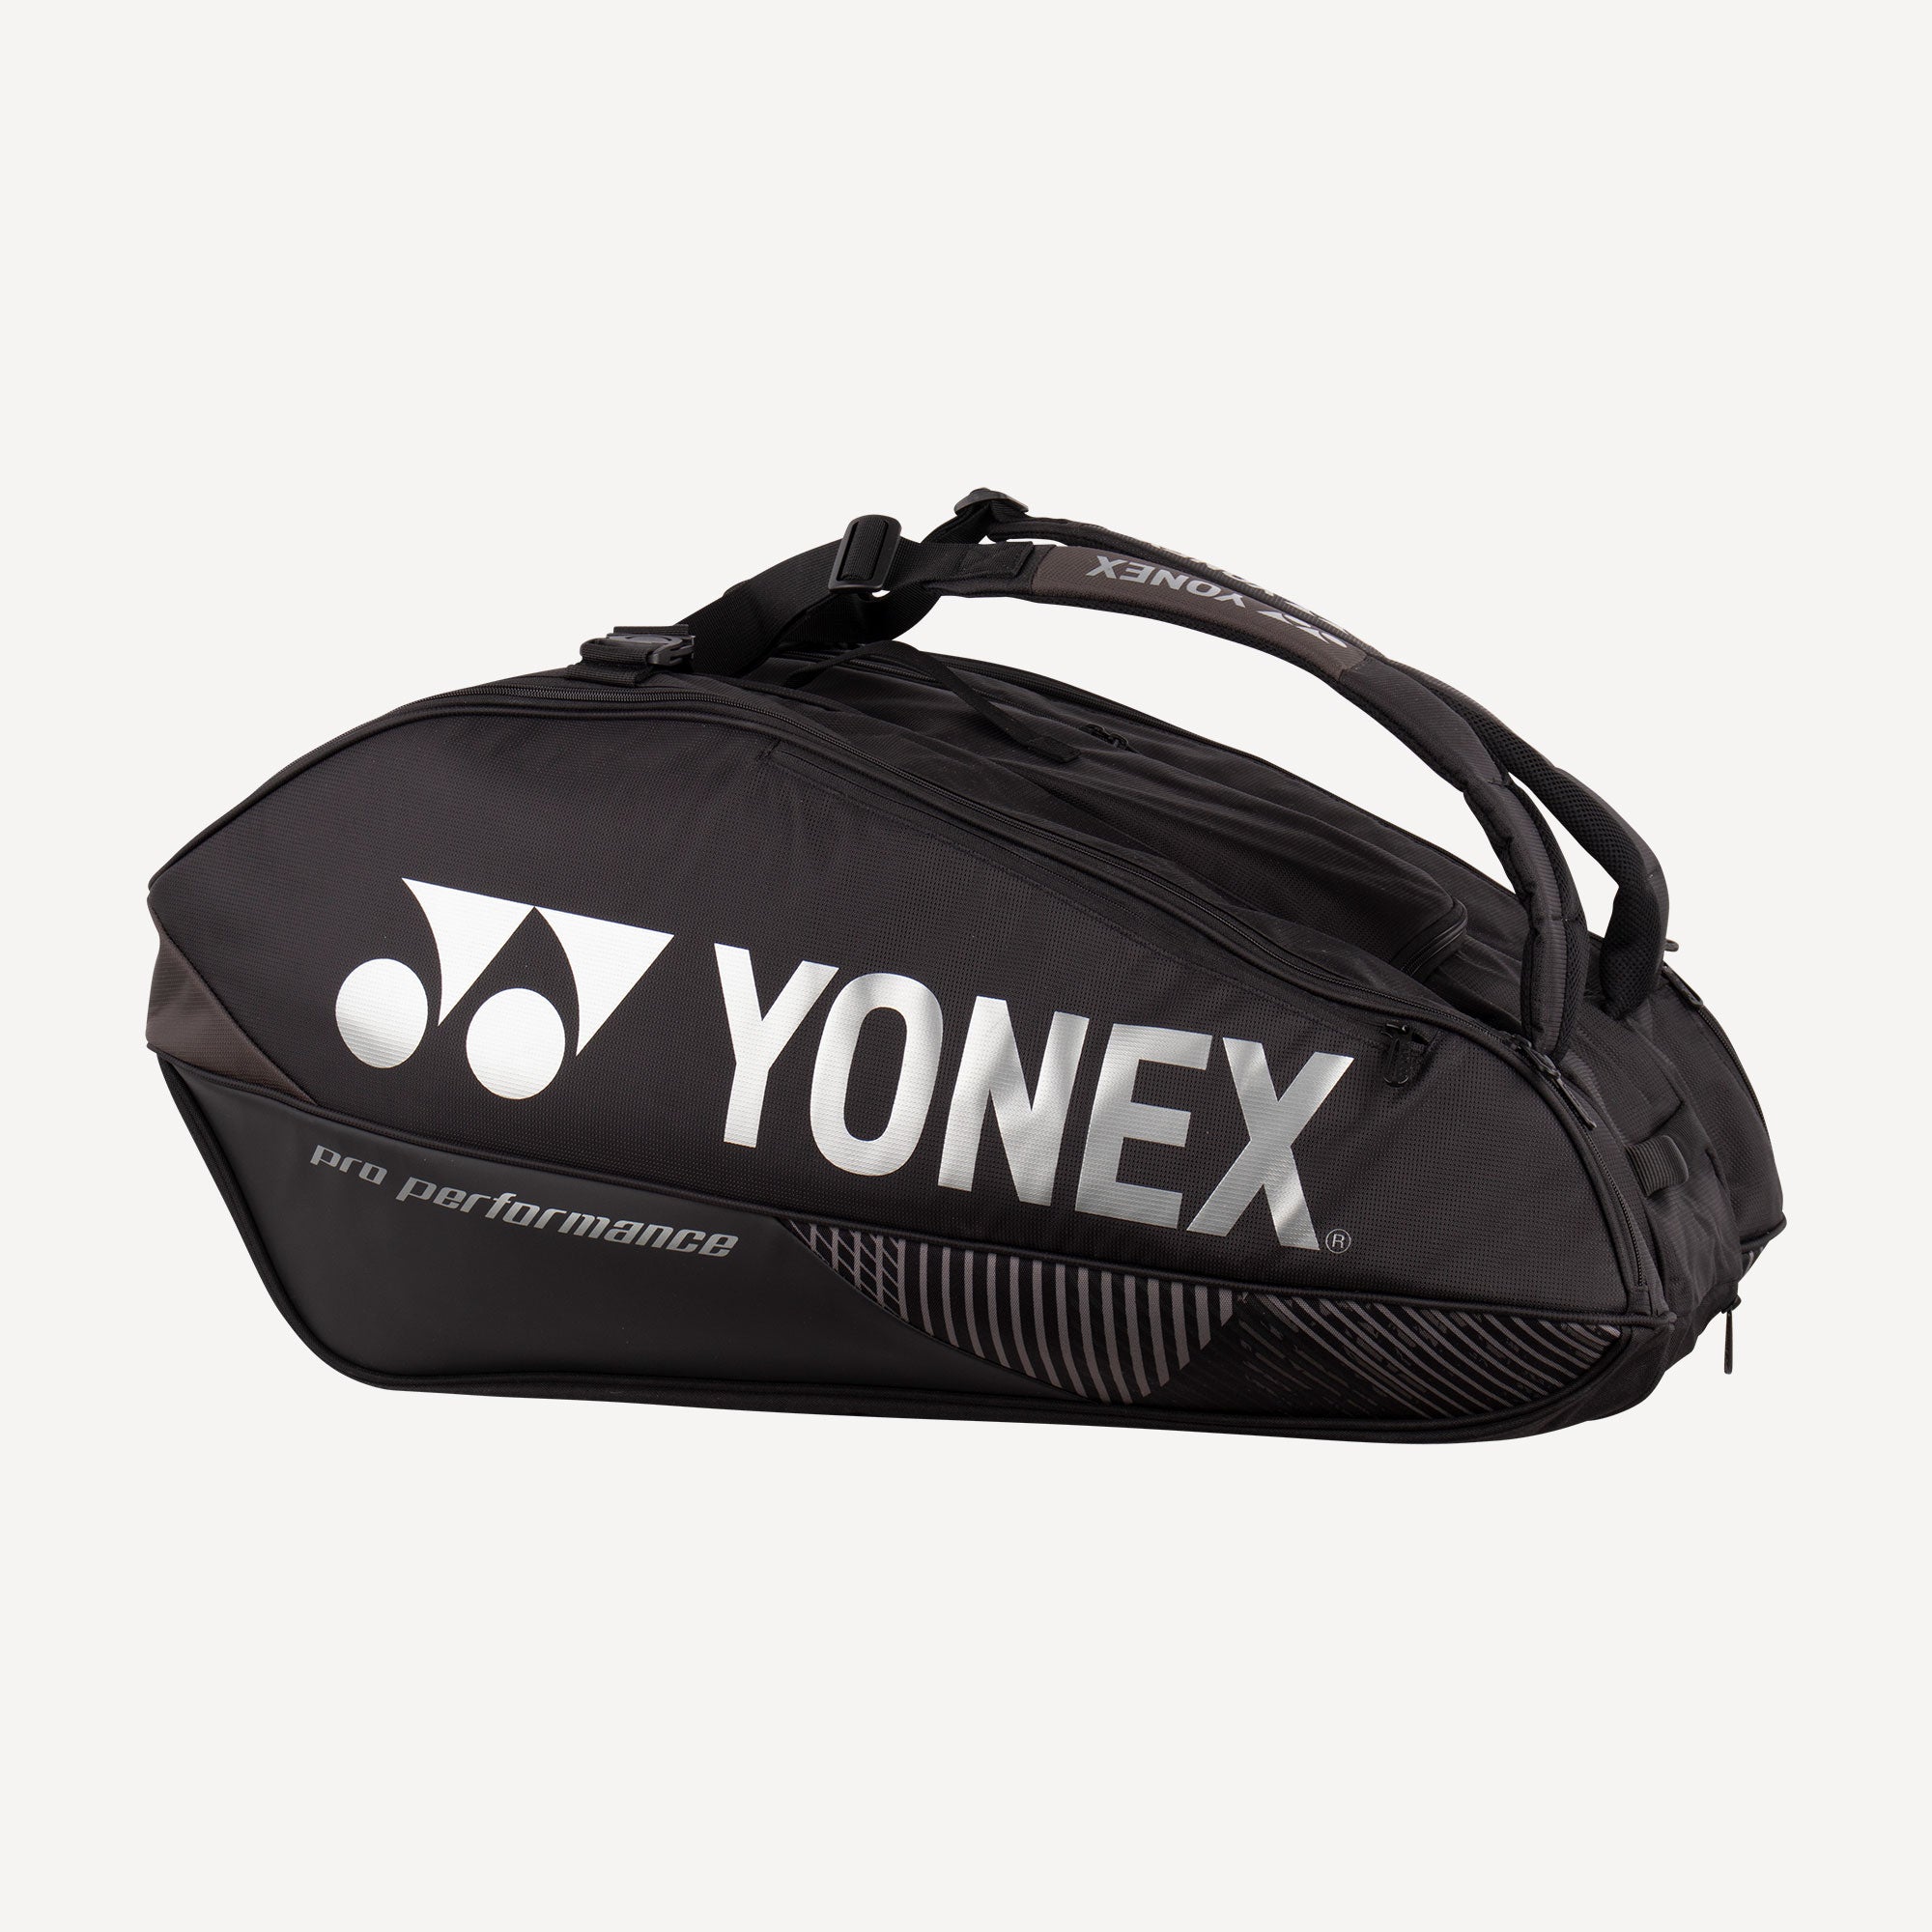 Yonex Pro 9 Racket Tennis Bag - Black (2)